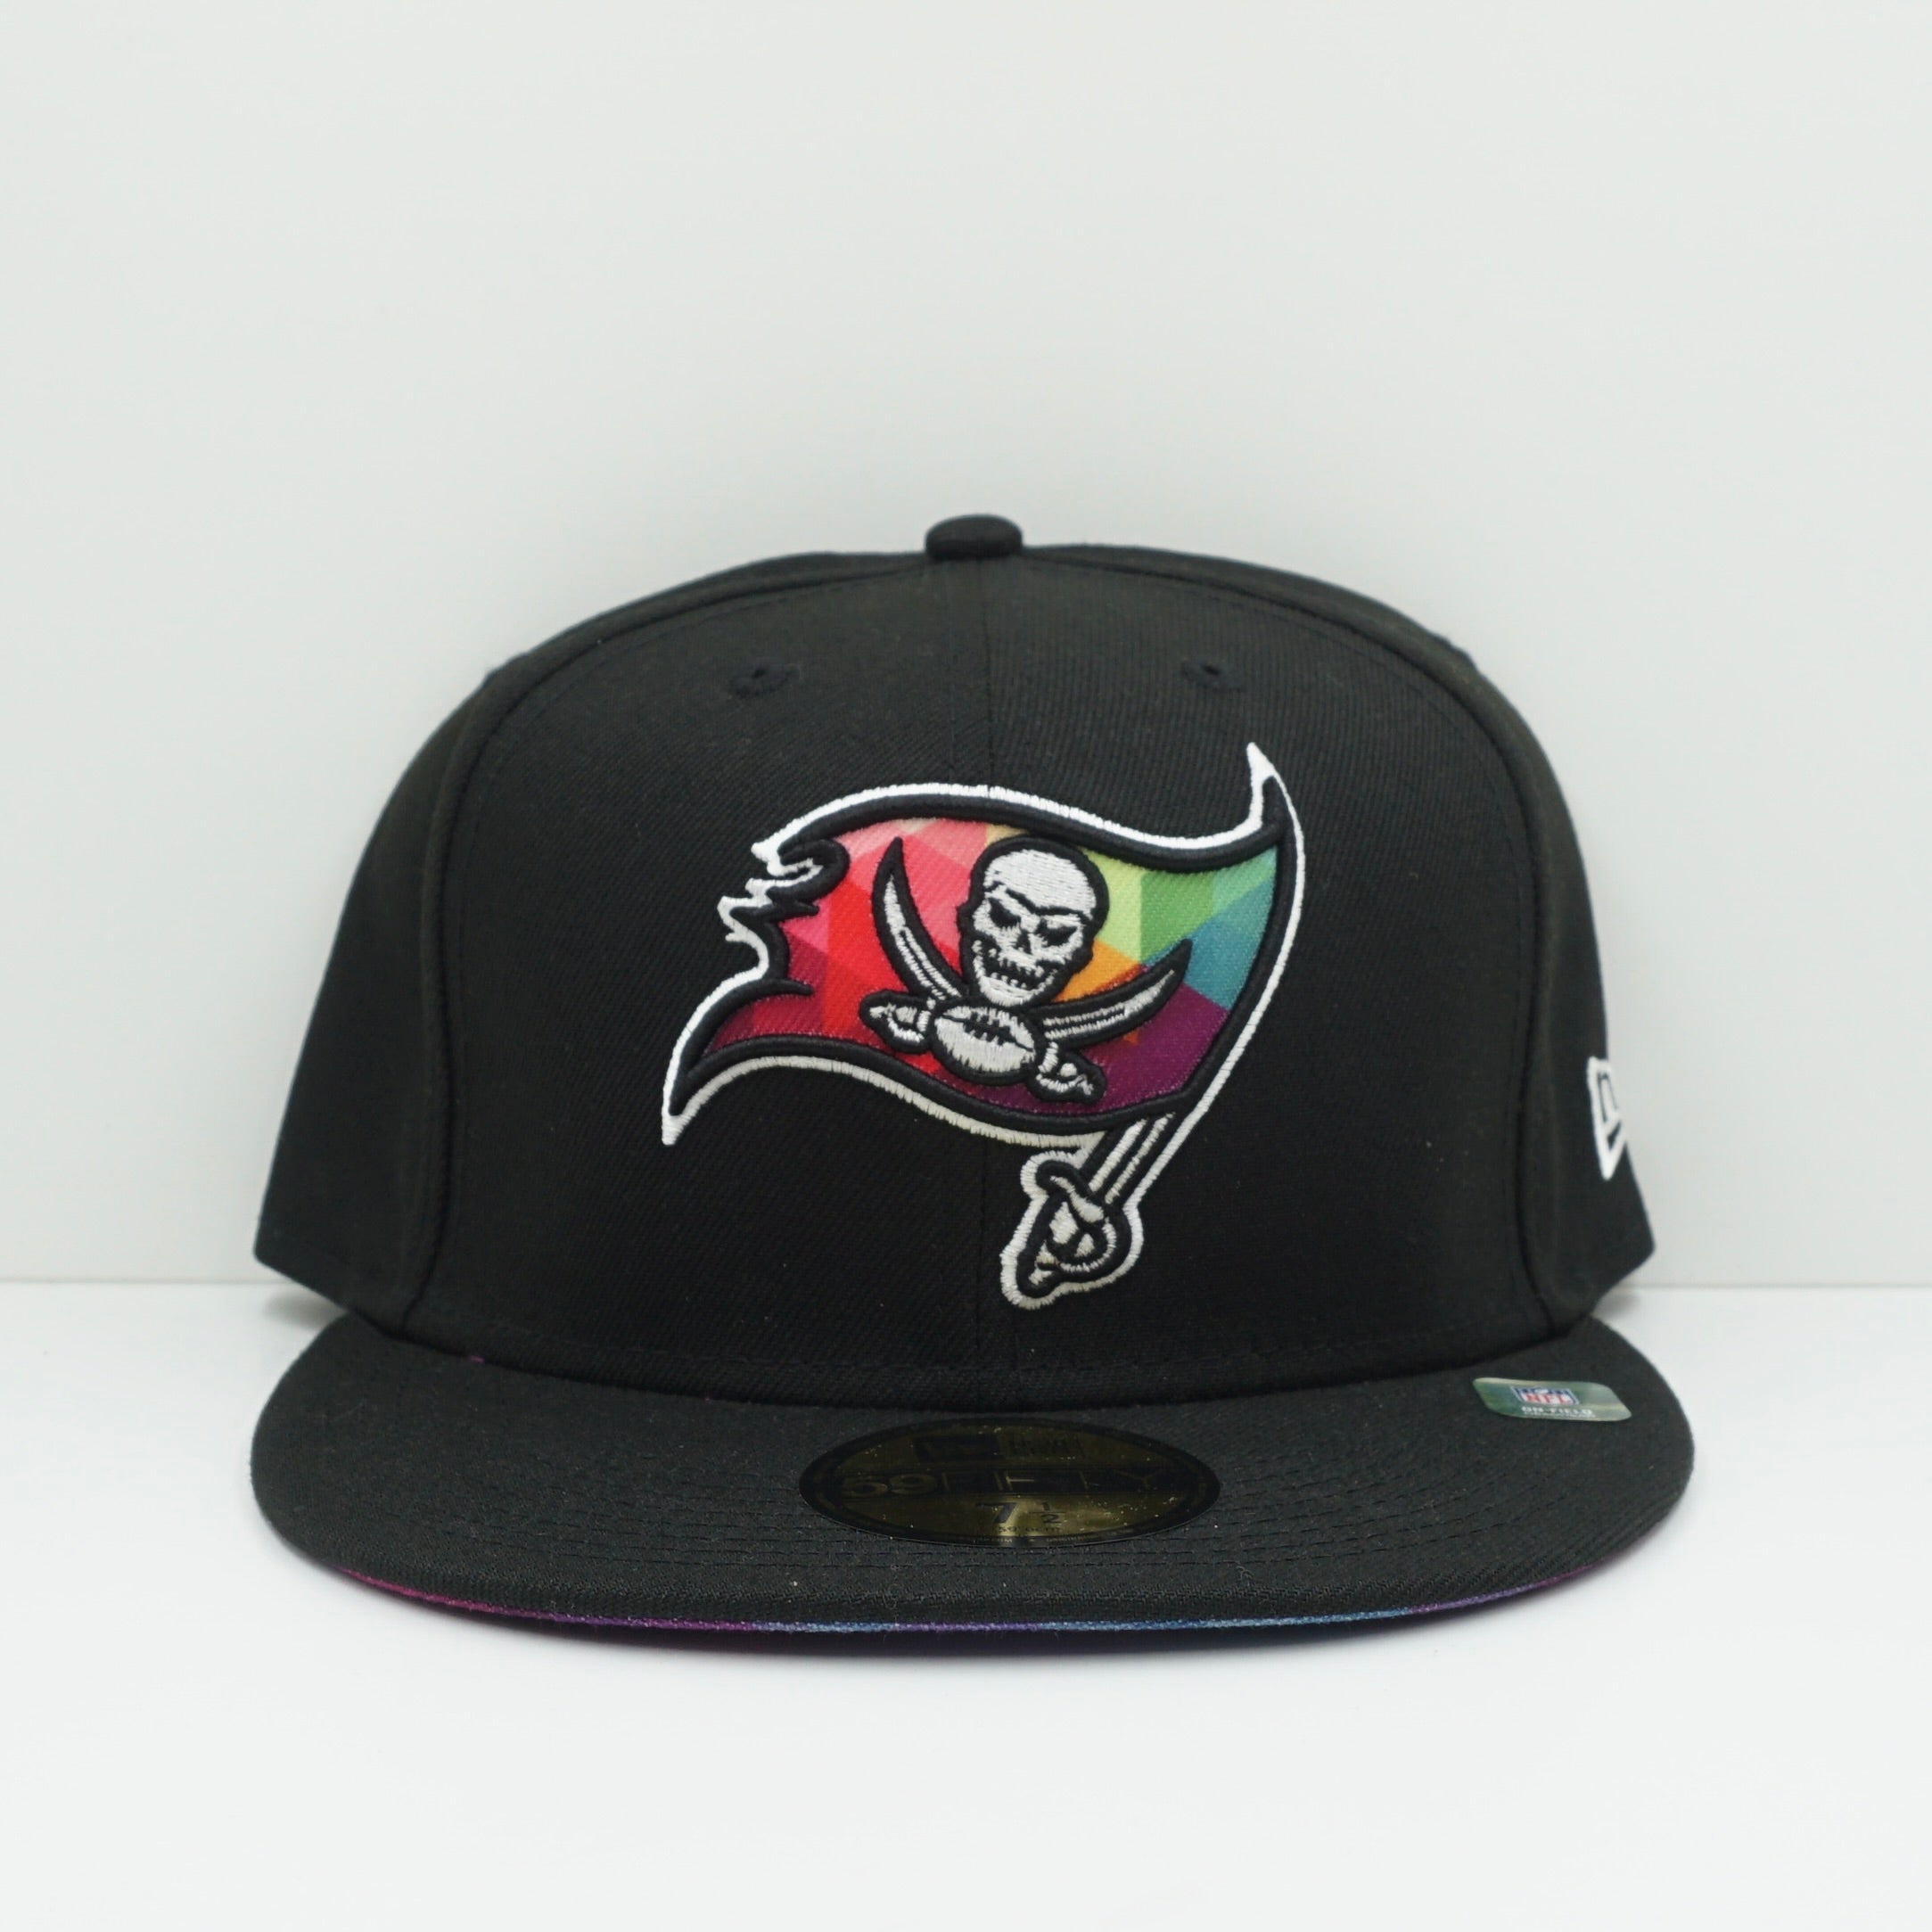 New Era Tampa Bay Buccaneers Black Fitted Cap